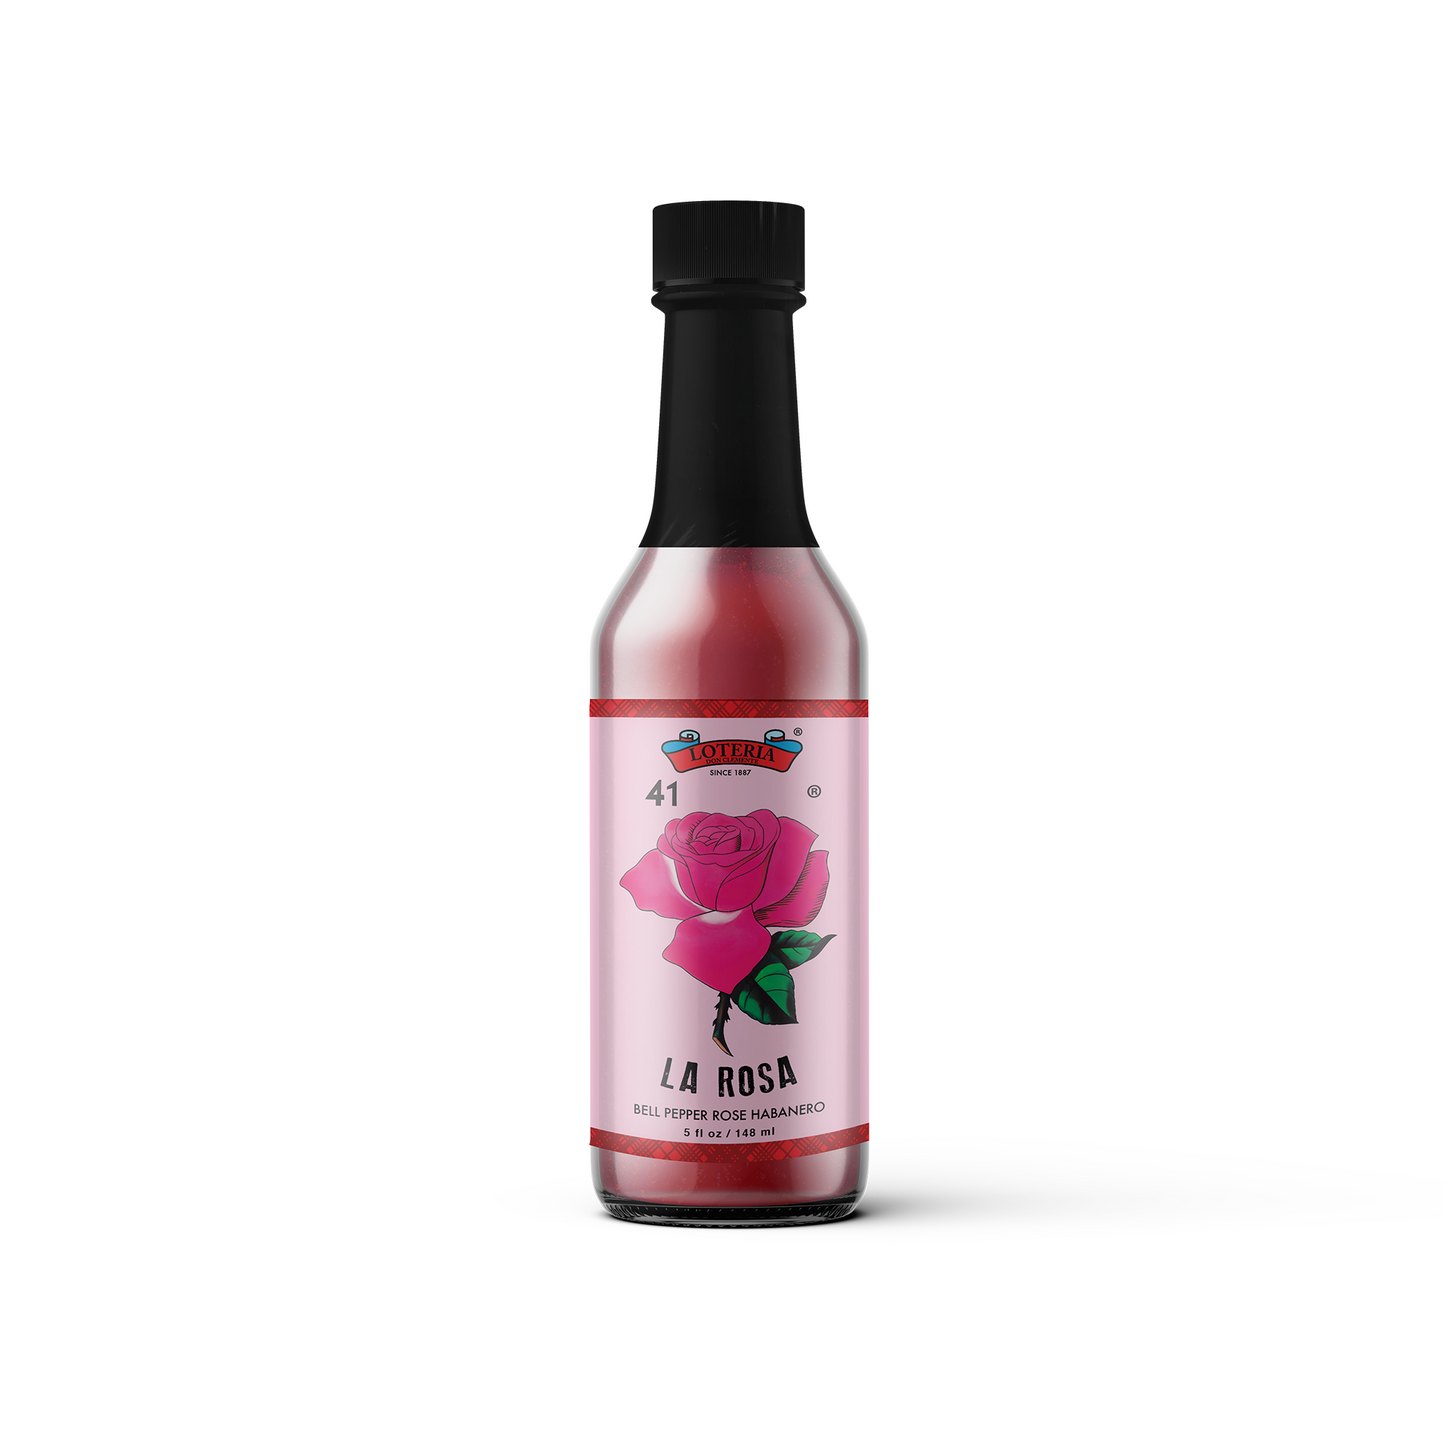 La Rosa : Bell Pepper Rose Habanero Sauce